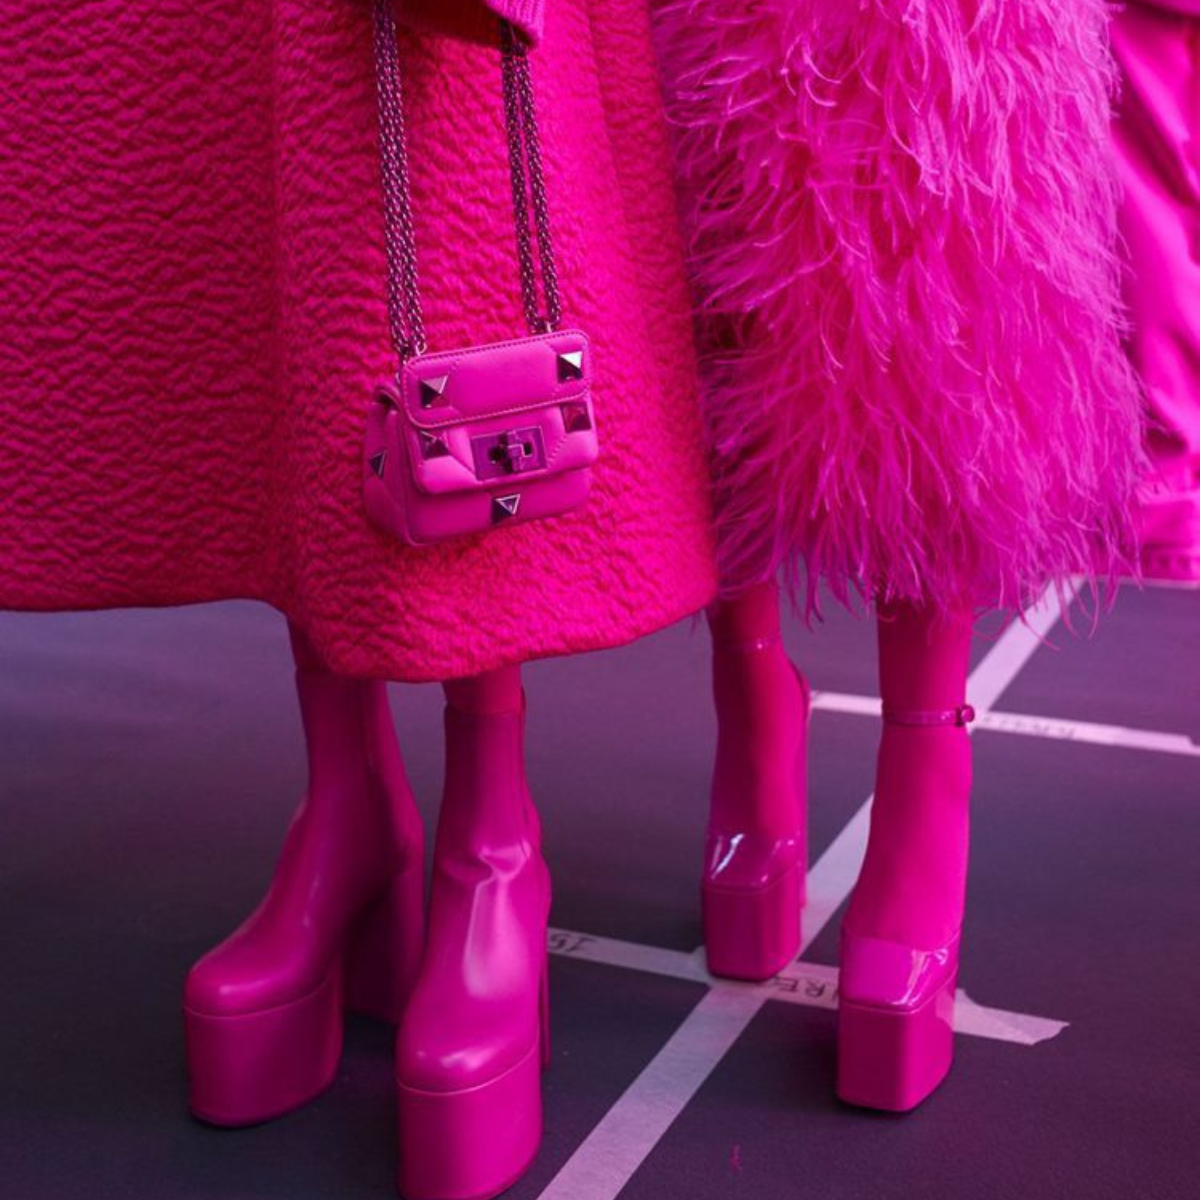 Roupas rosa inspiradas na barbie na moda feminina